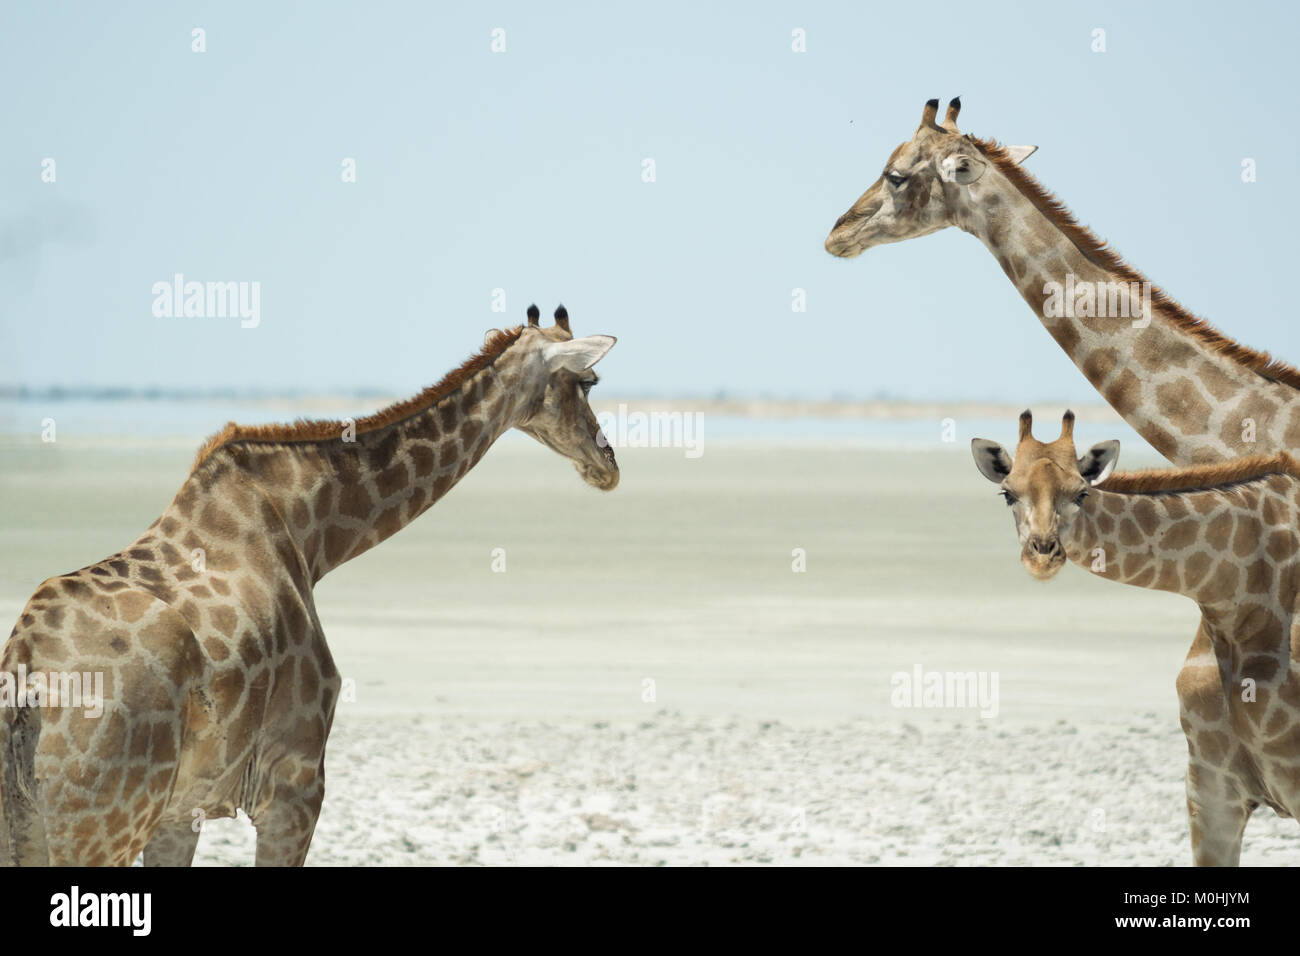 Three Giraffe heads and long necks, one looking at camera Stock Photo